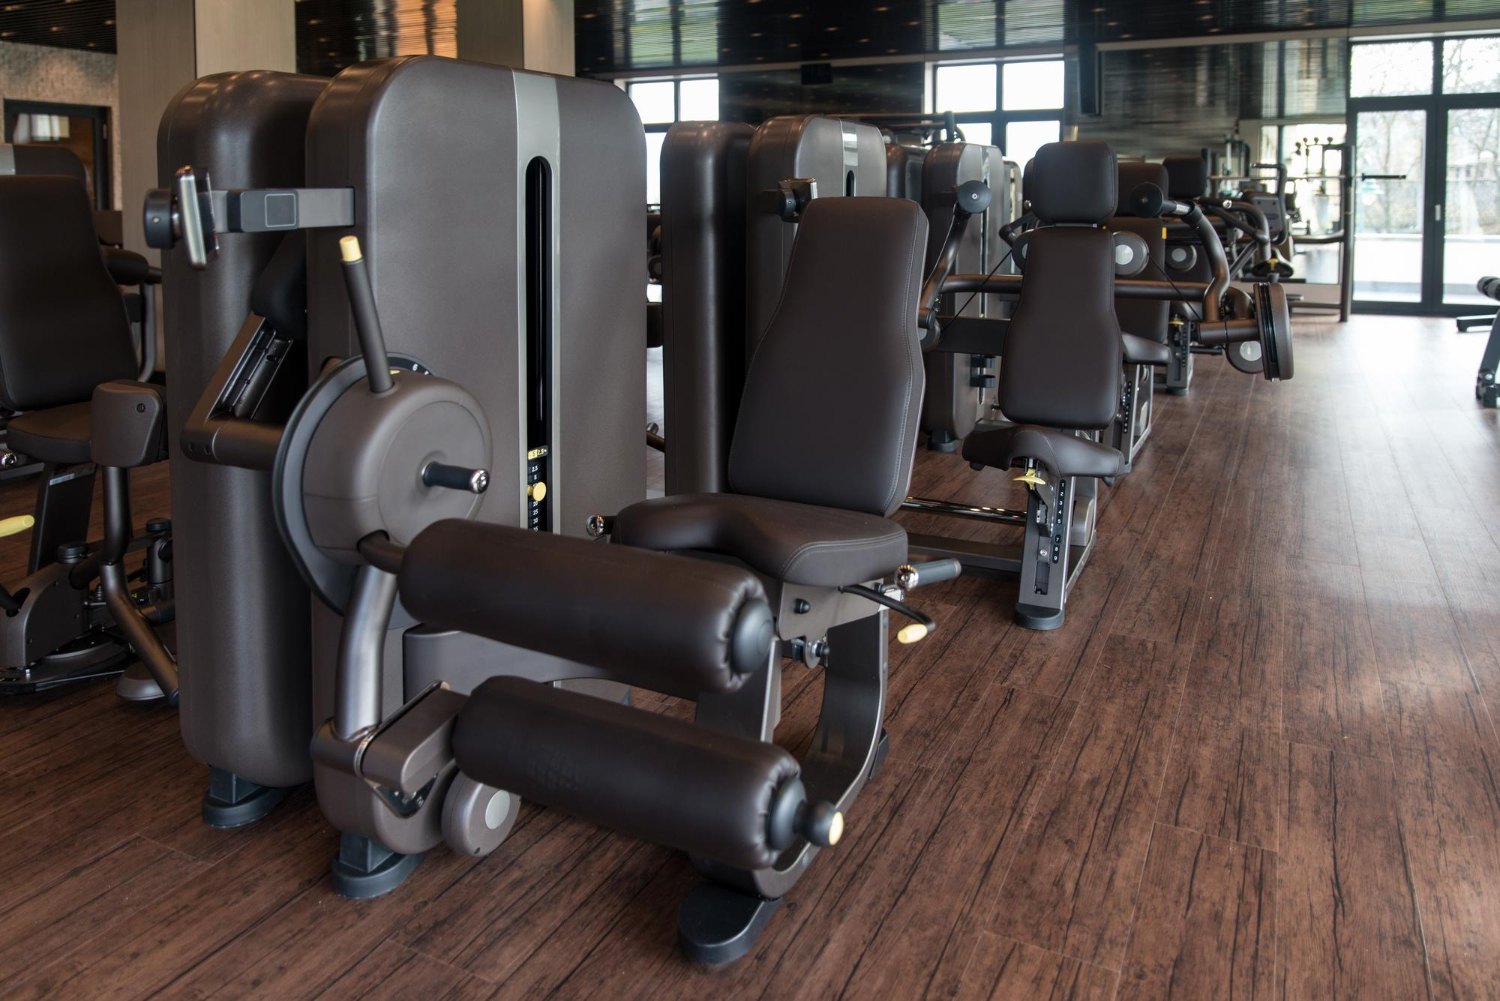 equipment machines modern gym room fitness center